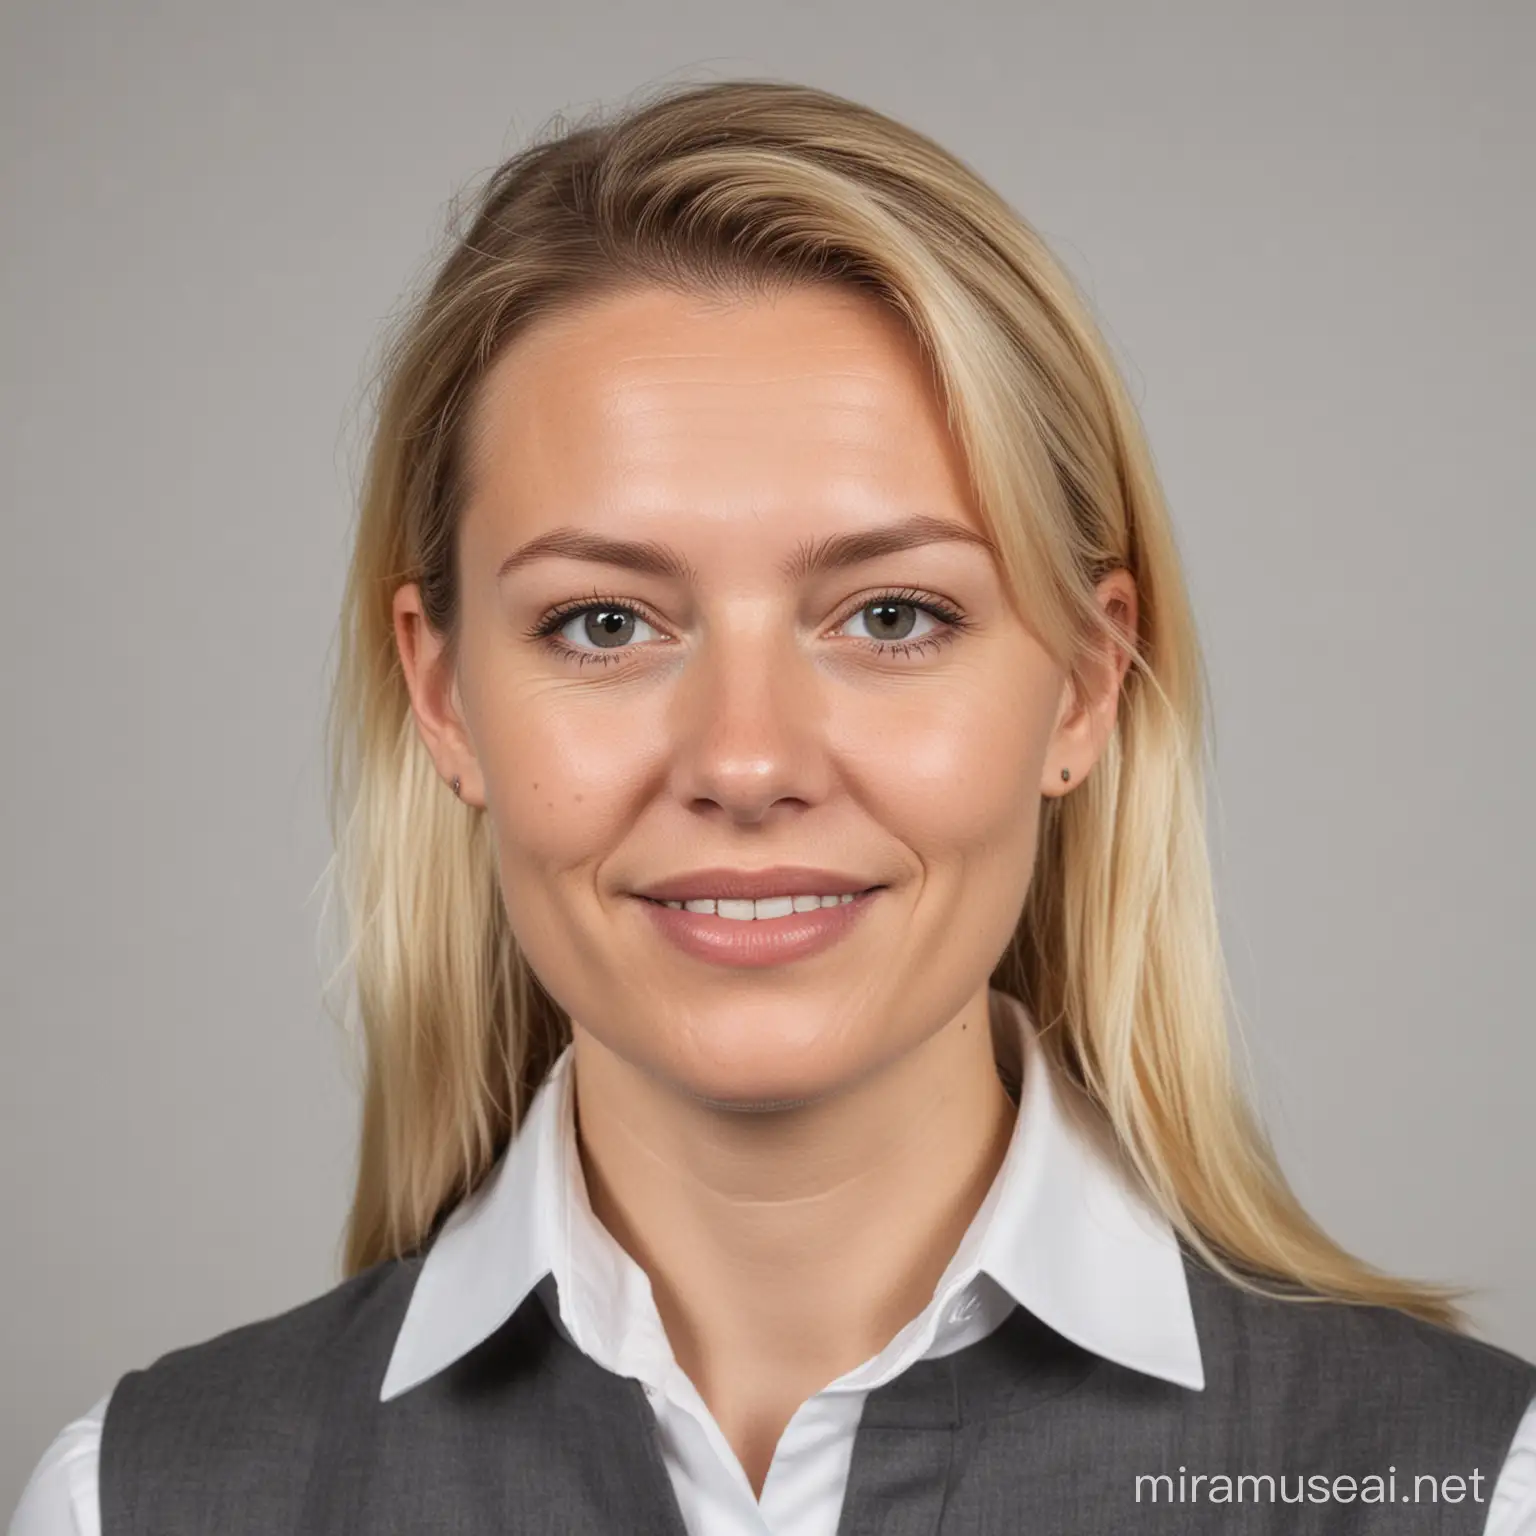 Anna Svensson
Projektledare, Teknikföretaget AB